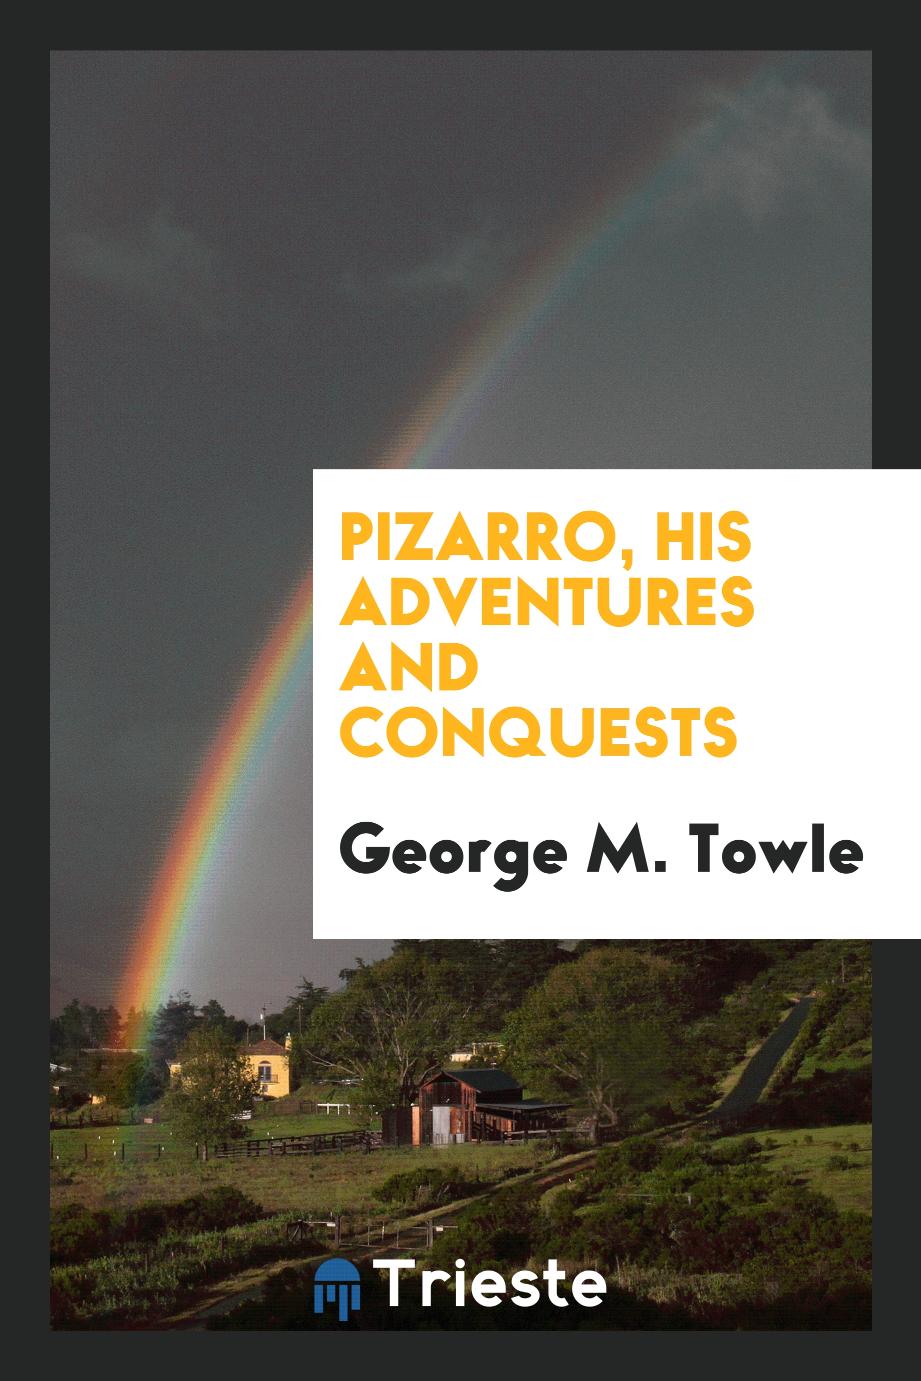 Pizarro, his adventures and conquests